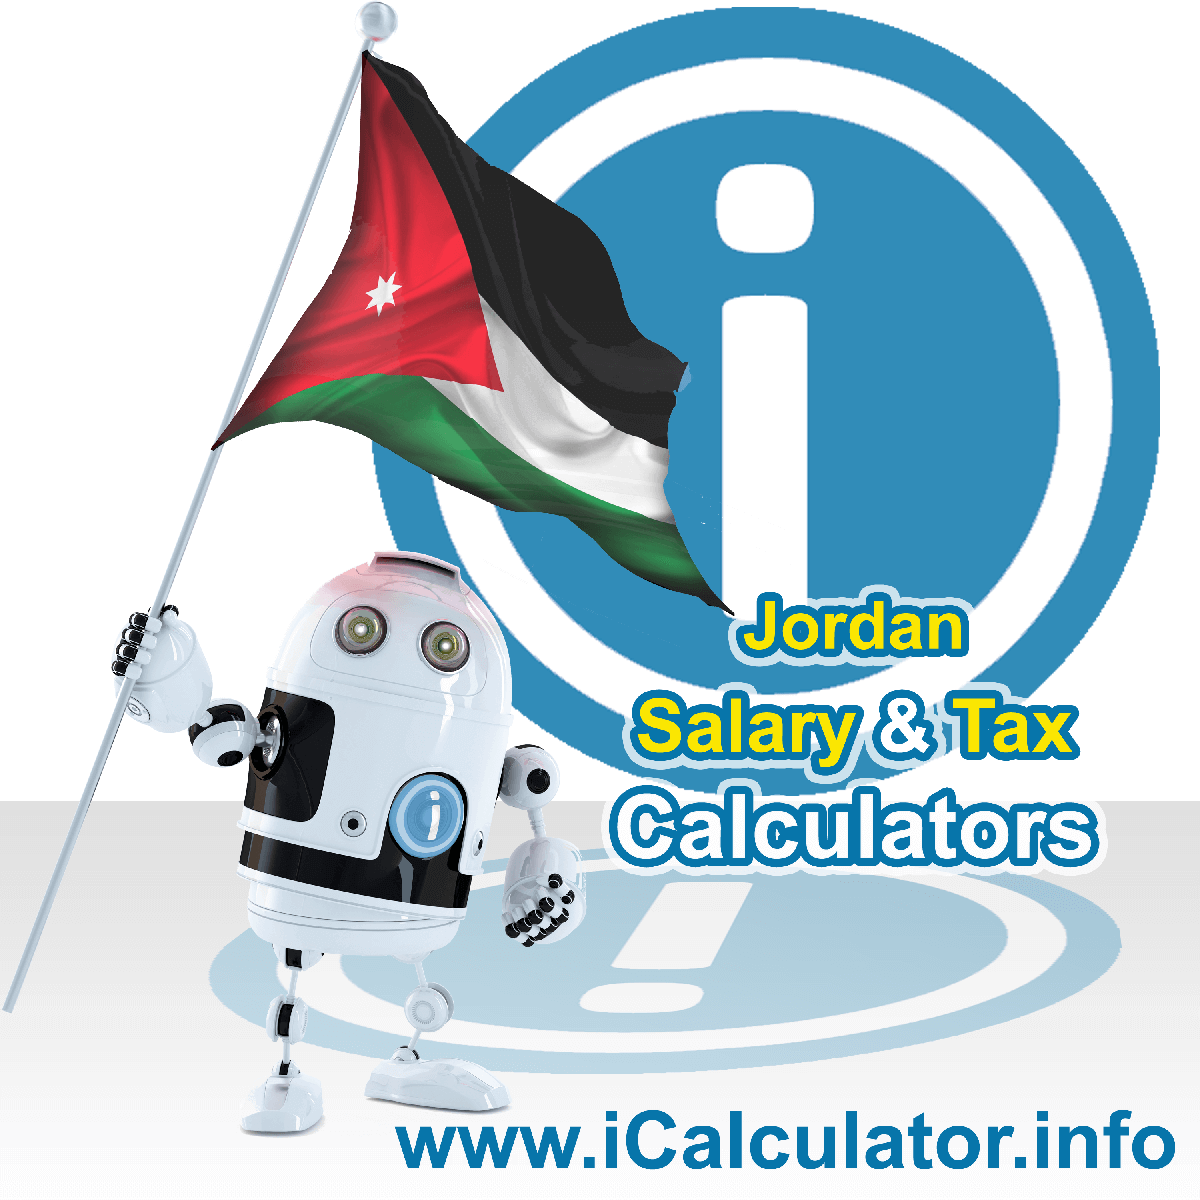 Jordan Tax Calculator. This image shows the Jordan flag and information relating to the tax formula for the Jordan Salary Calculator